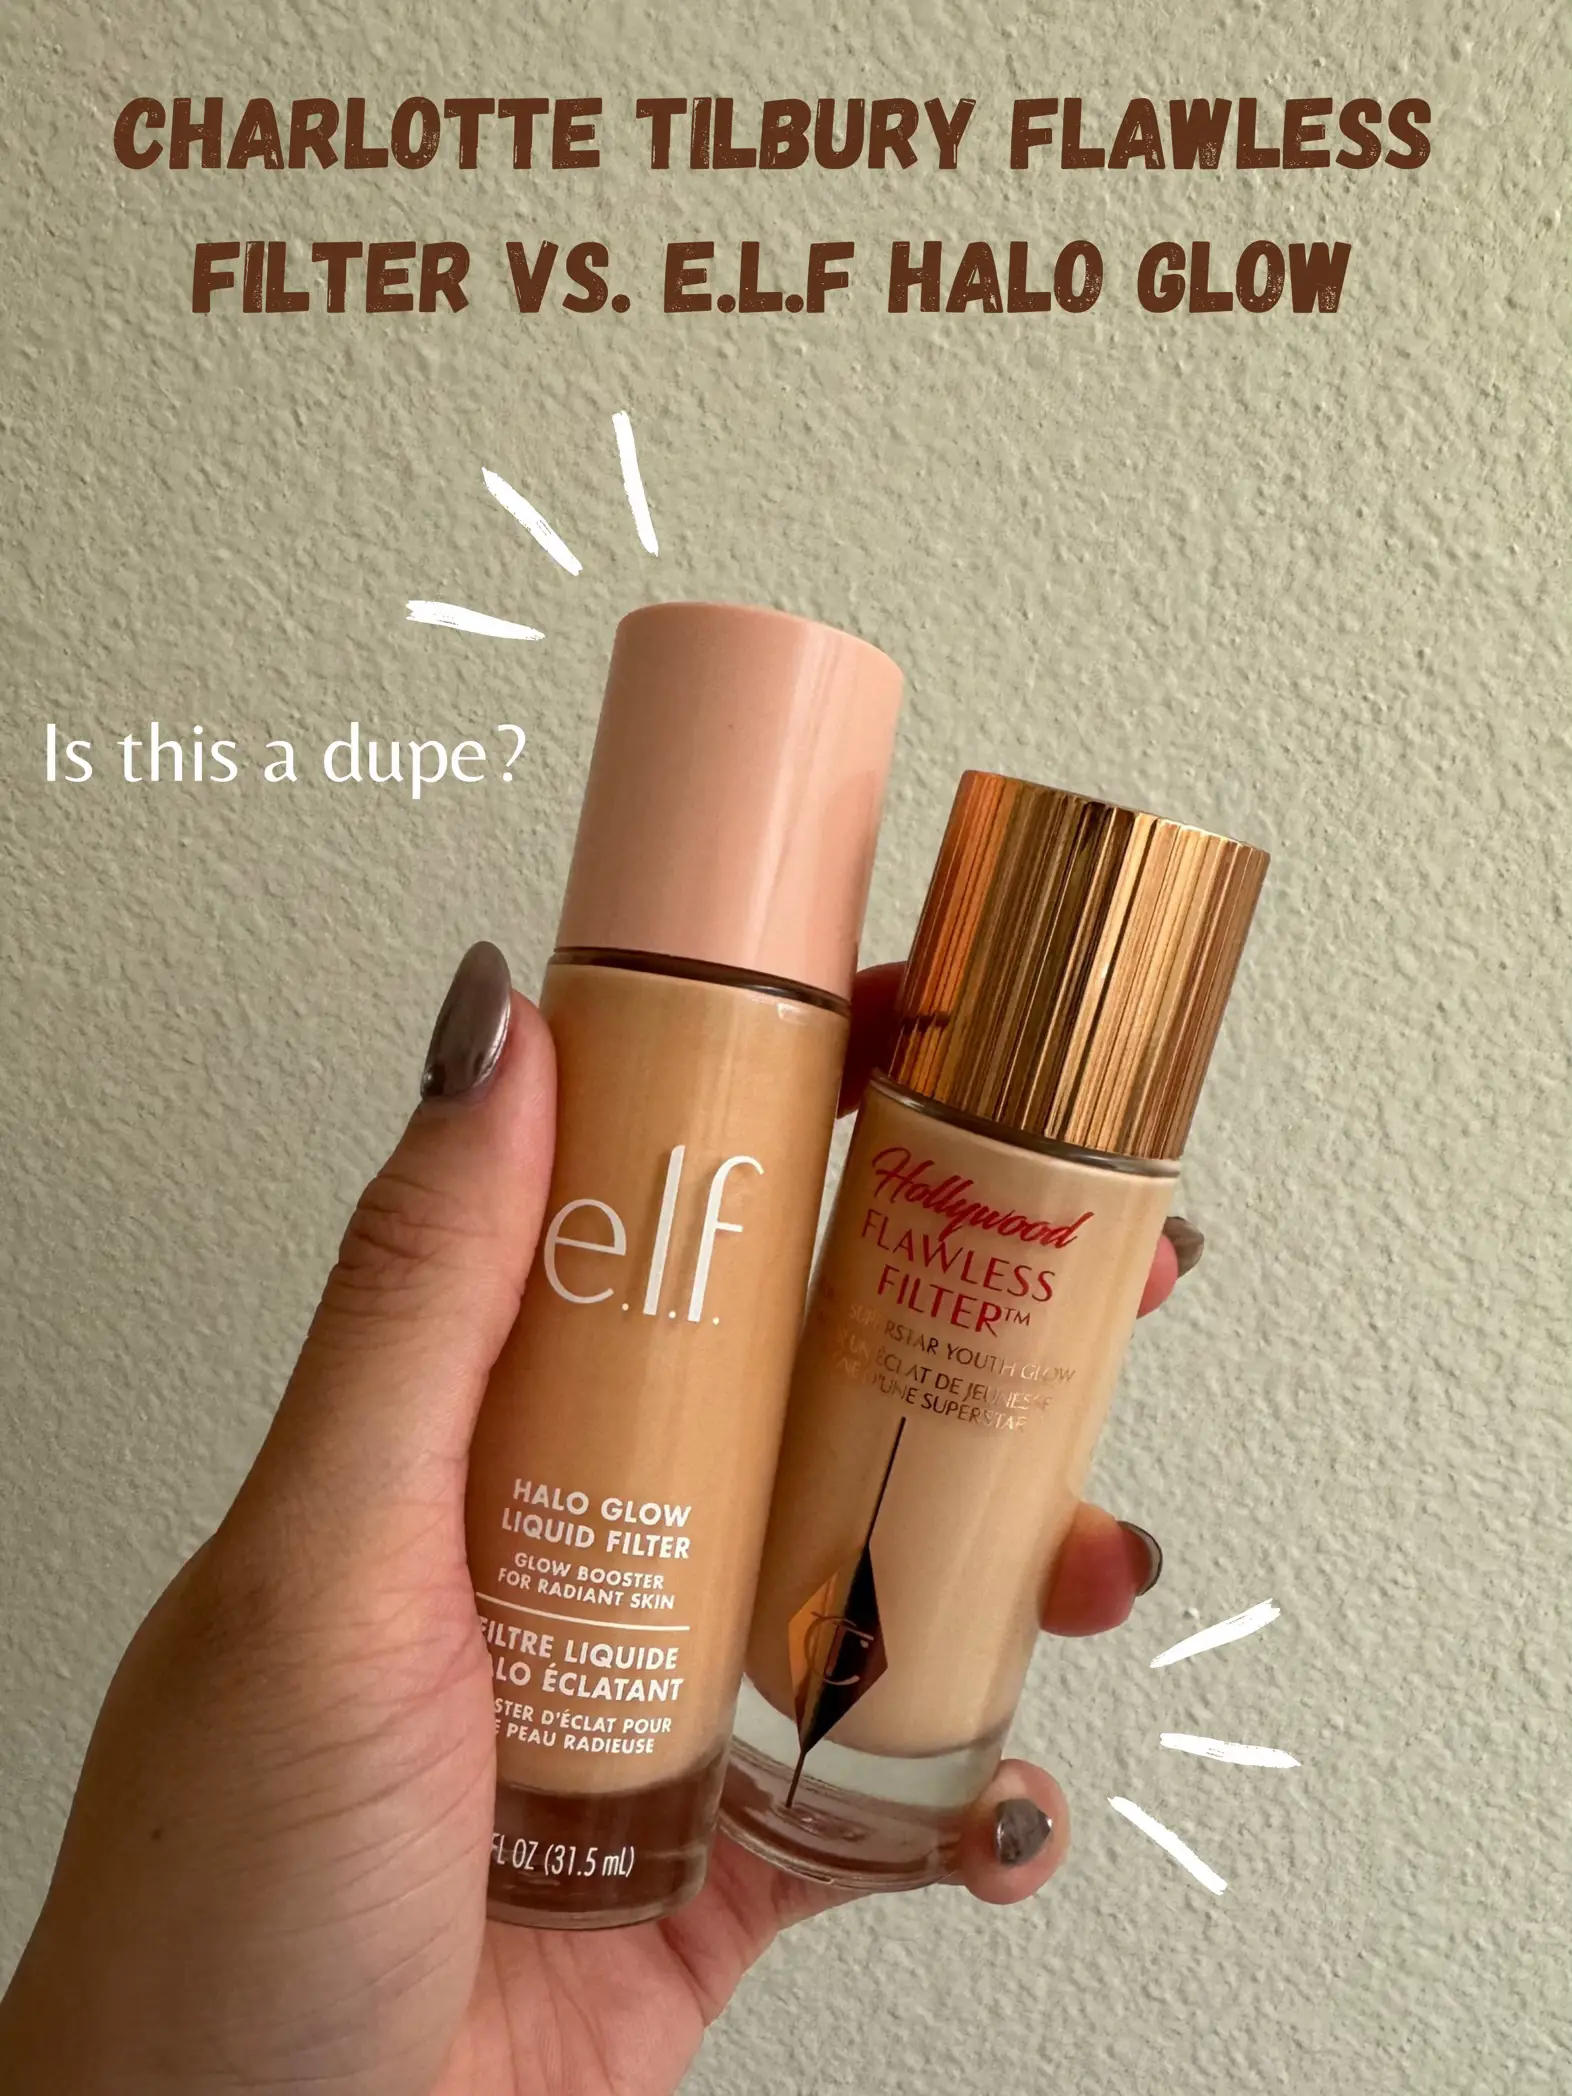 Charlotte Tilbury Flawless Filter vs e.l.f Halo Glow